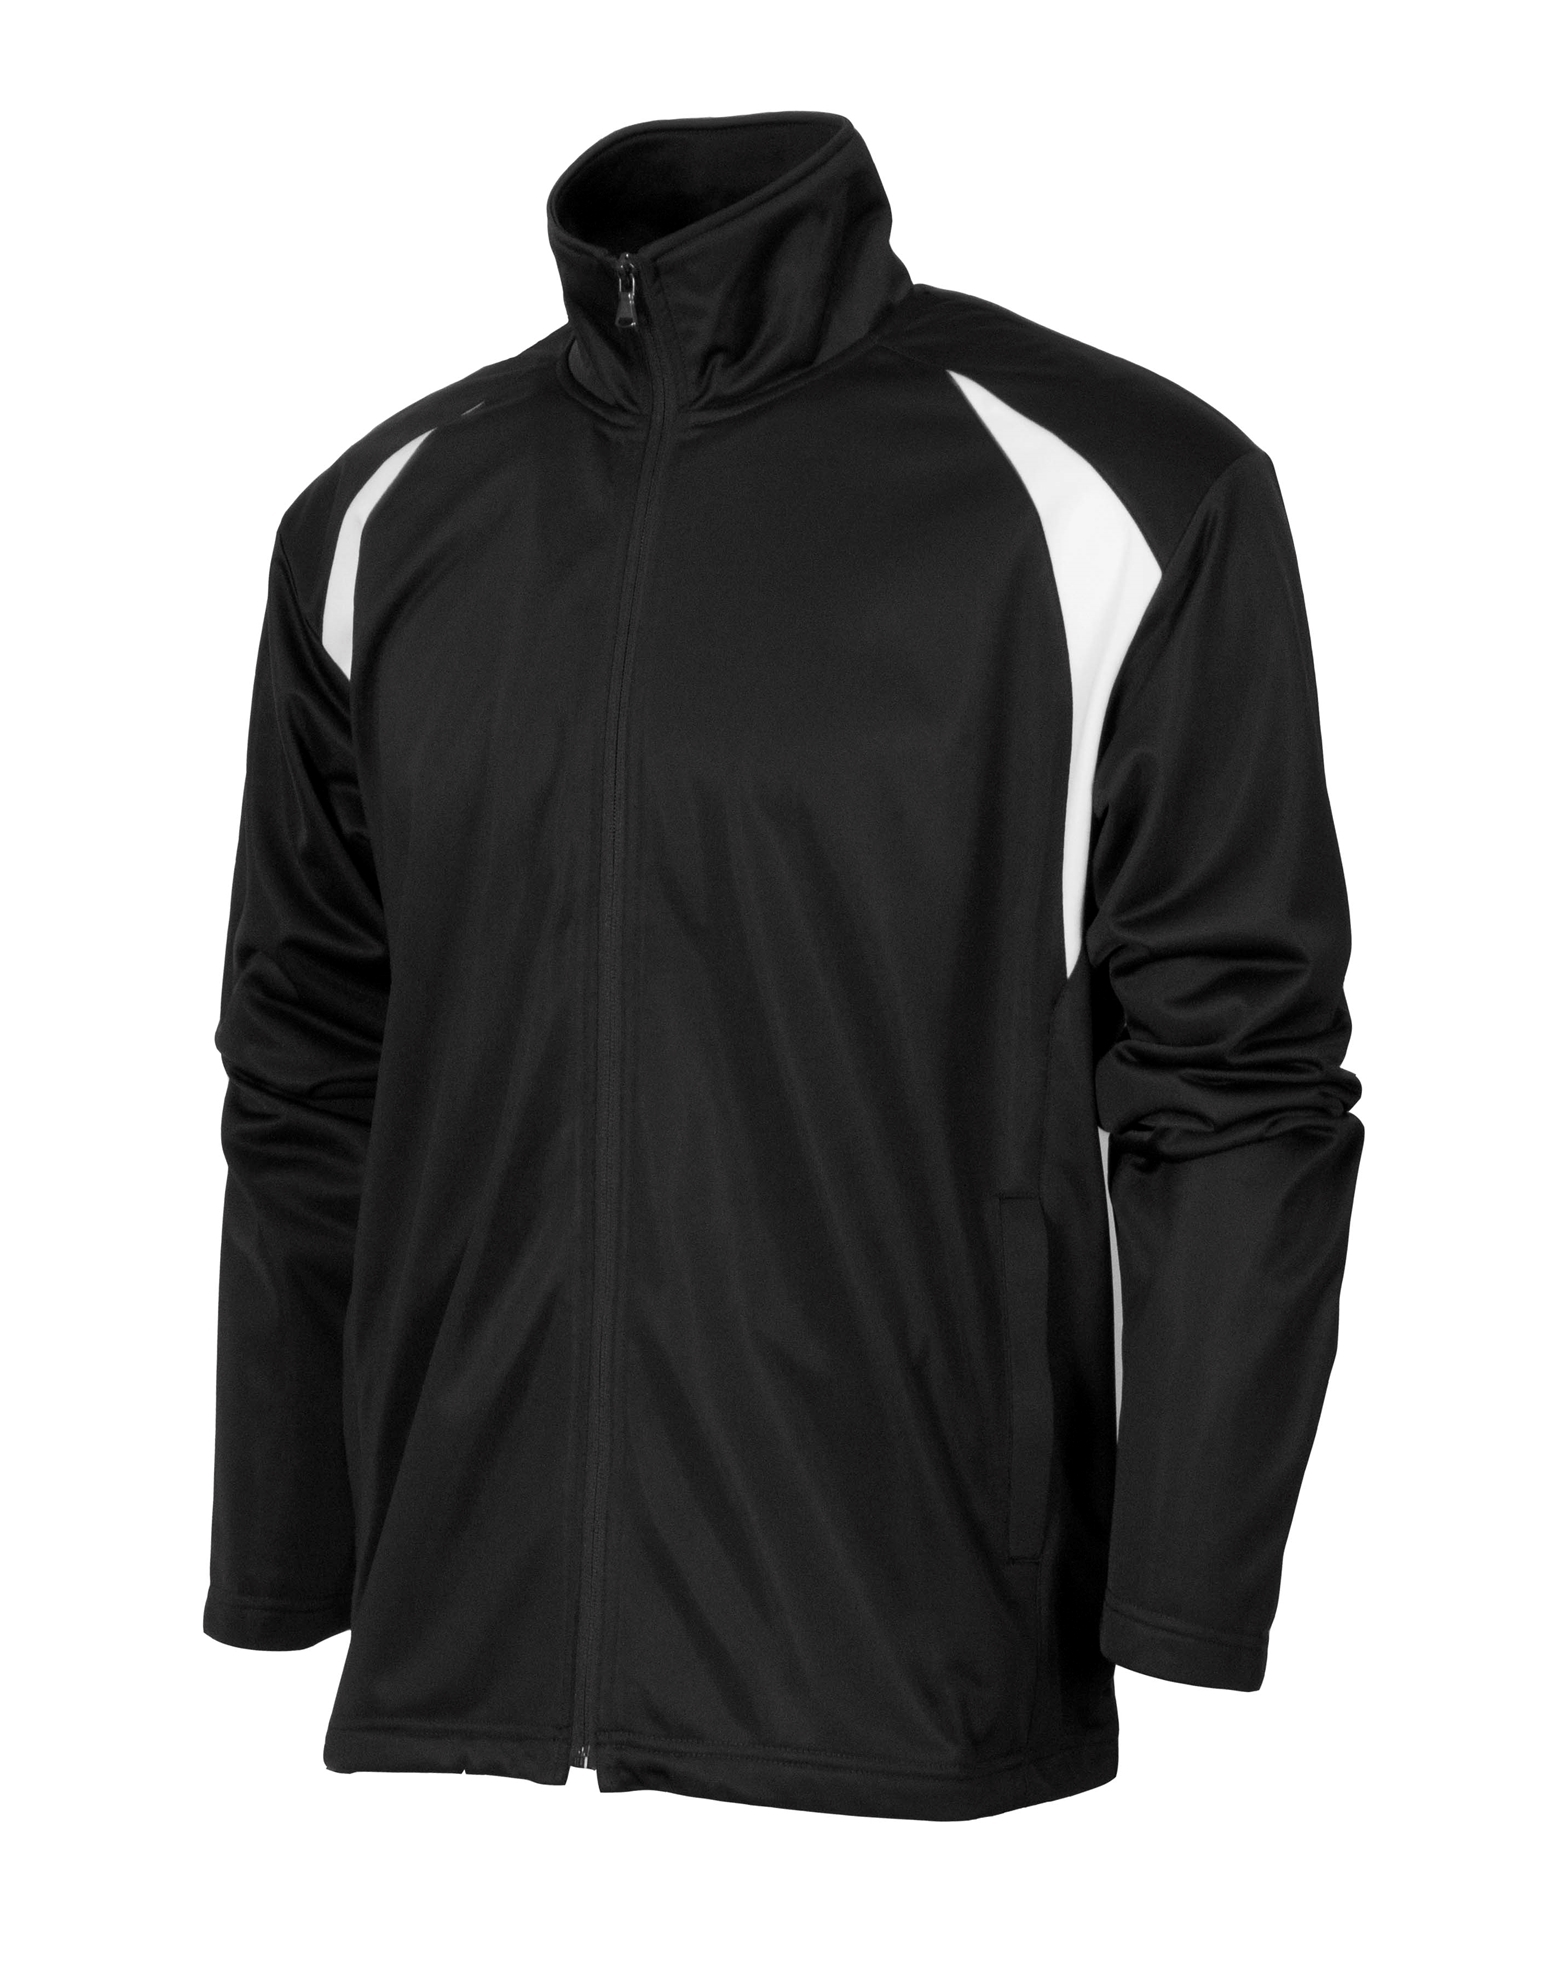 BAW Athletic Wear TC950 - Men's Colorblock Tricot Jacket